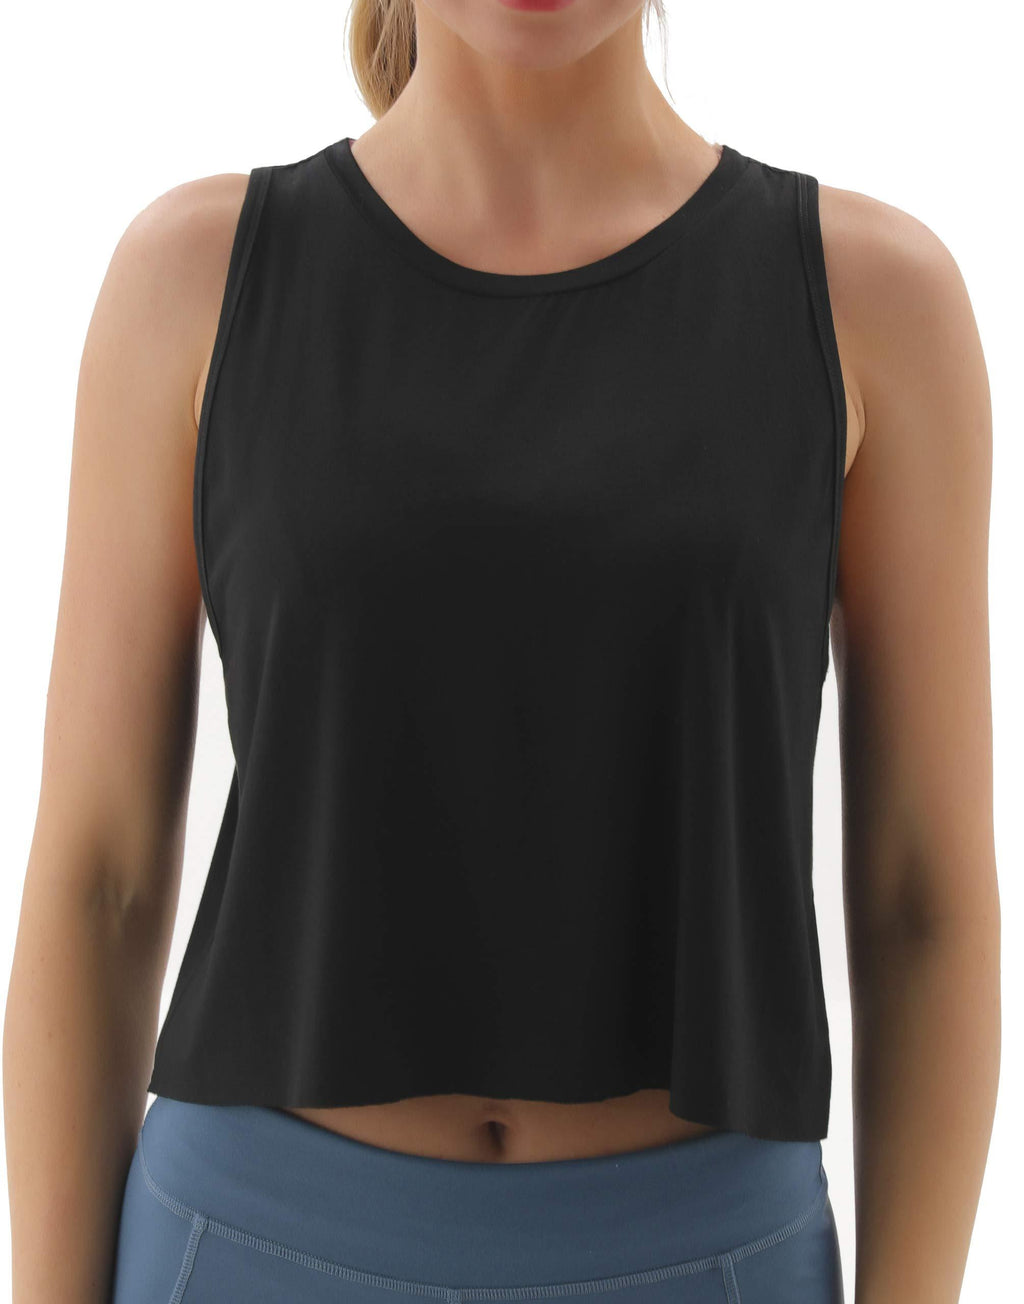 Workout Tops for Women-Tank Tops for Women Crop Sleeveless Tops for Women Tie Dye Design Black X-Small - BeesActive Australia